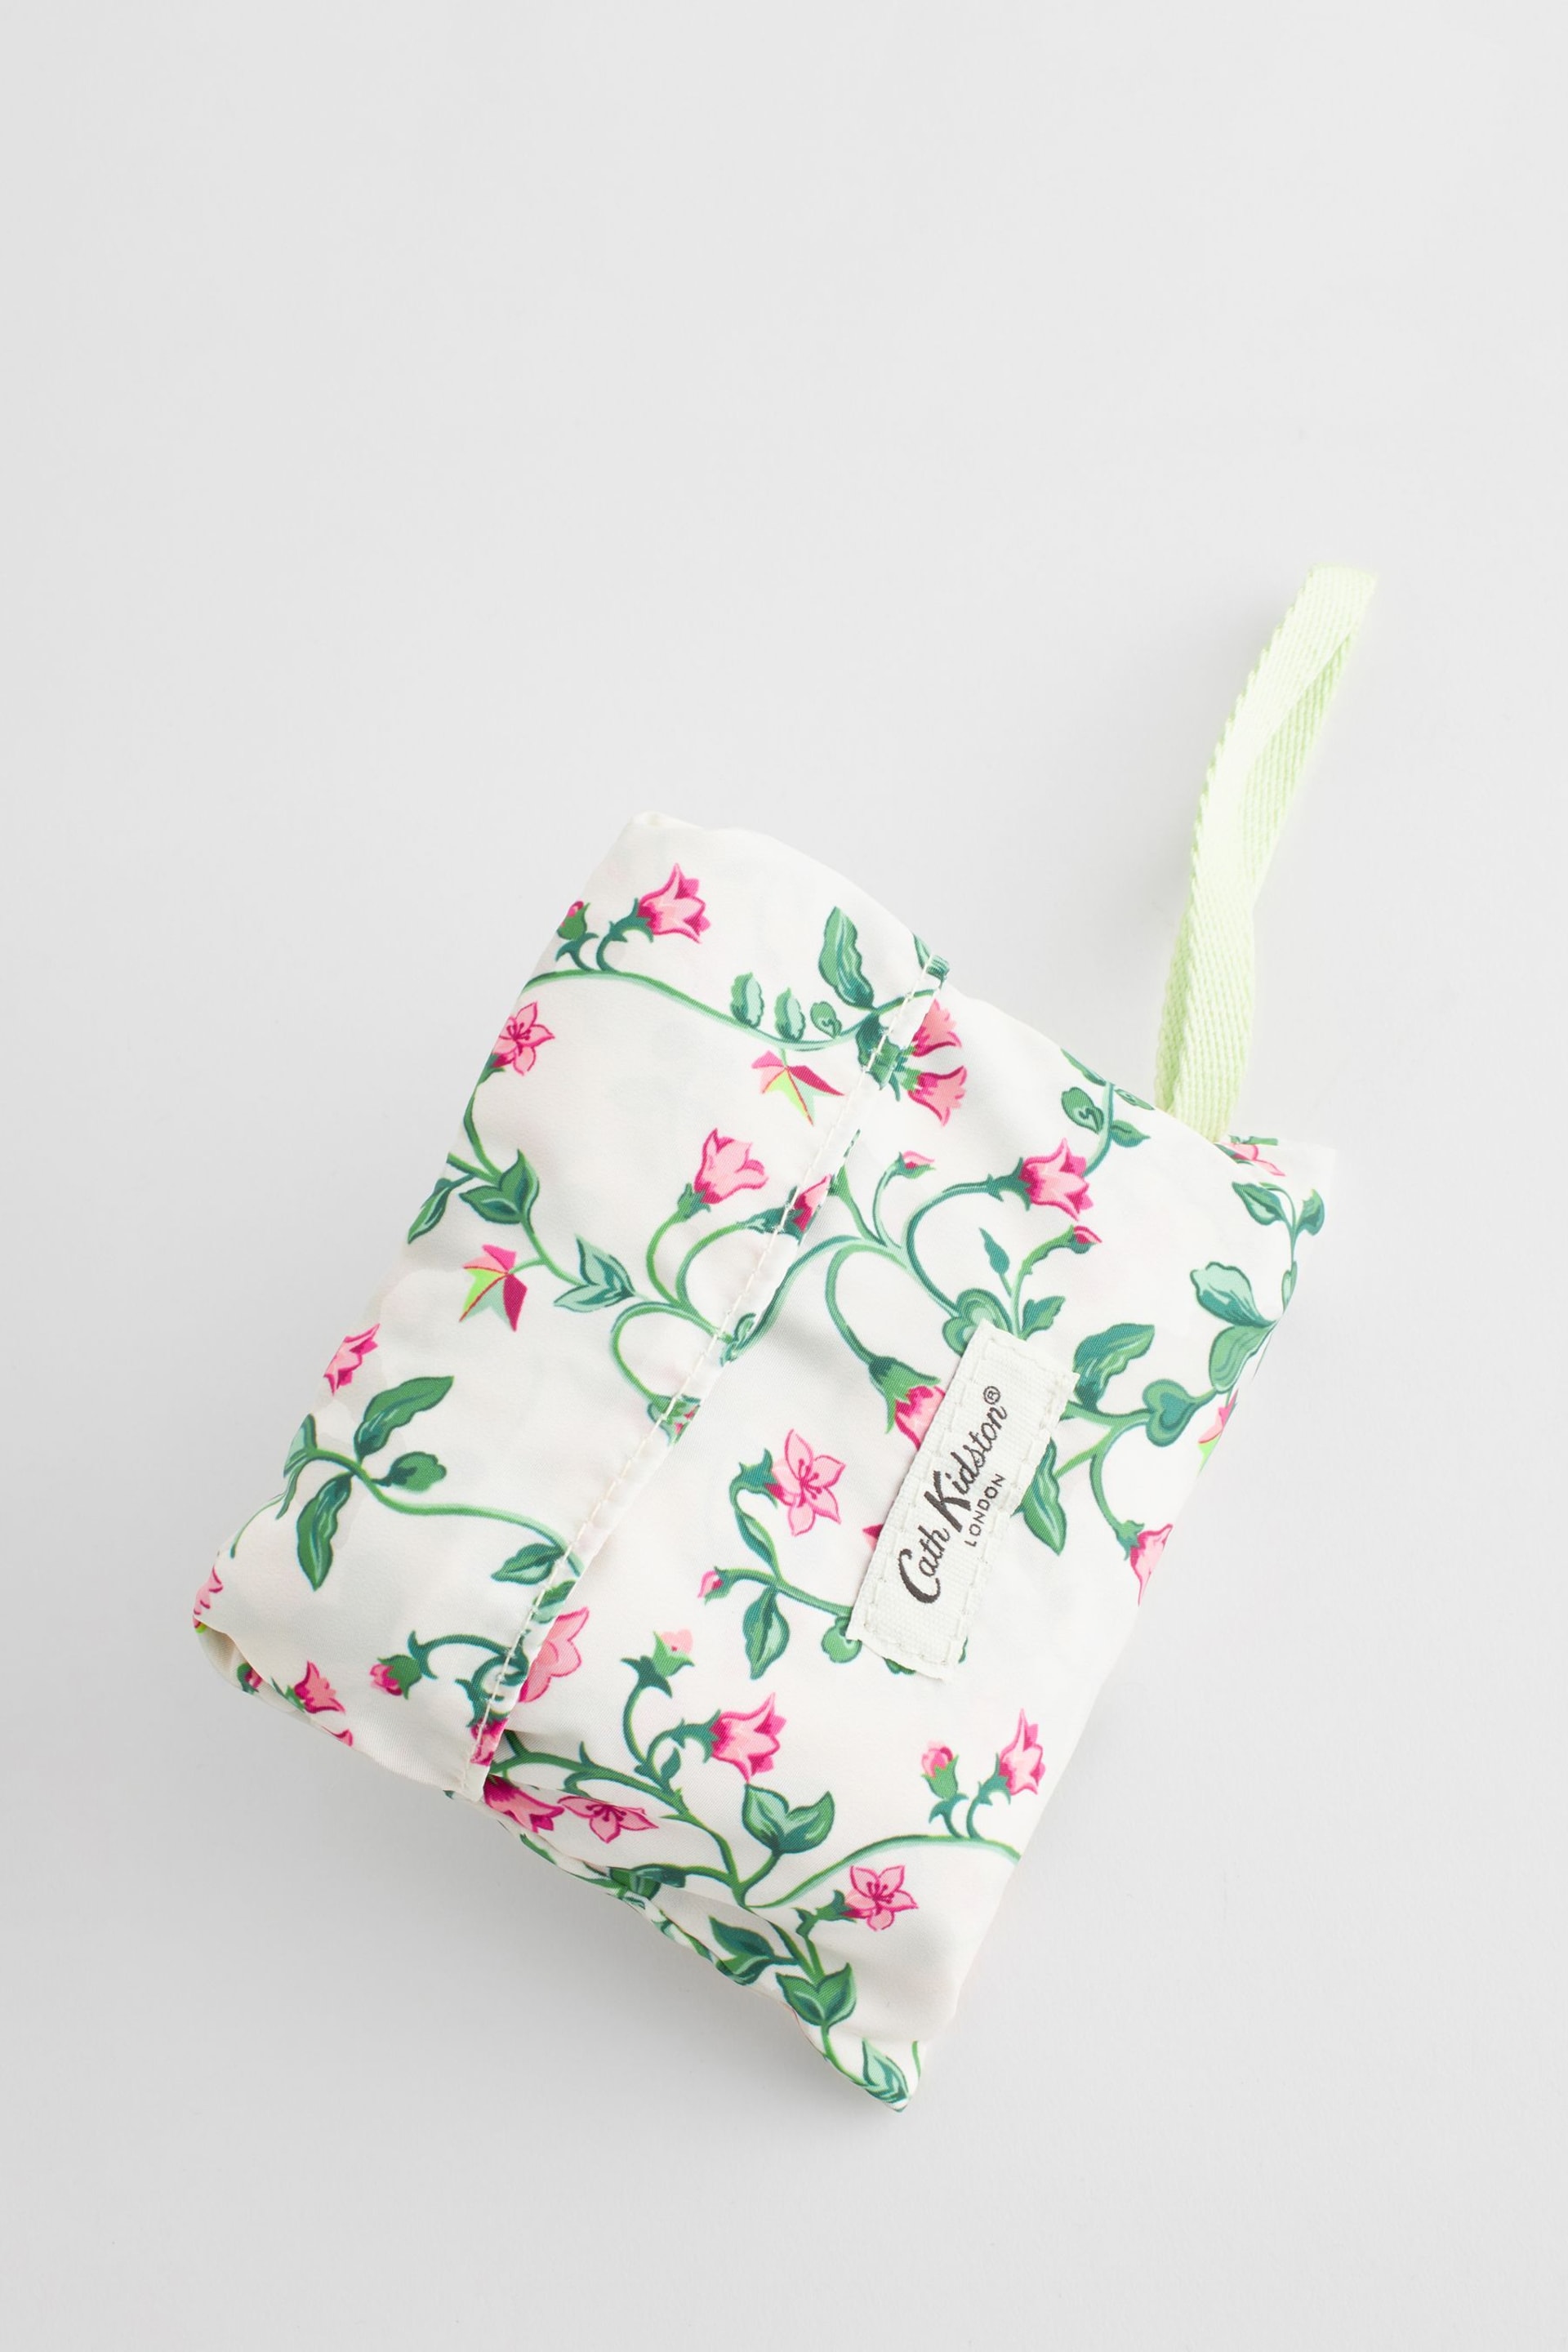 Cath Kidston Ecru Floral Print Foldaway Tote Bag - Image 7 of 7